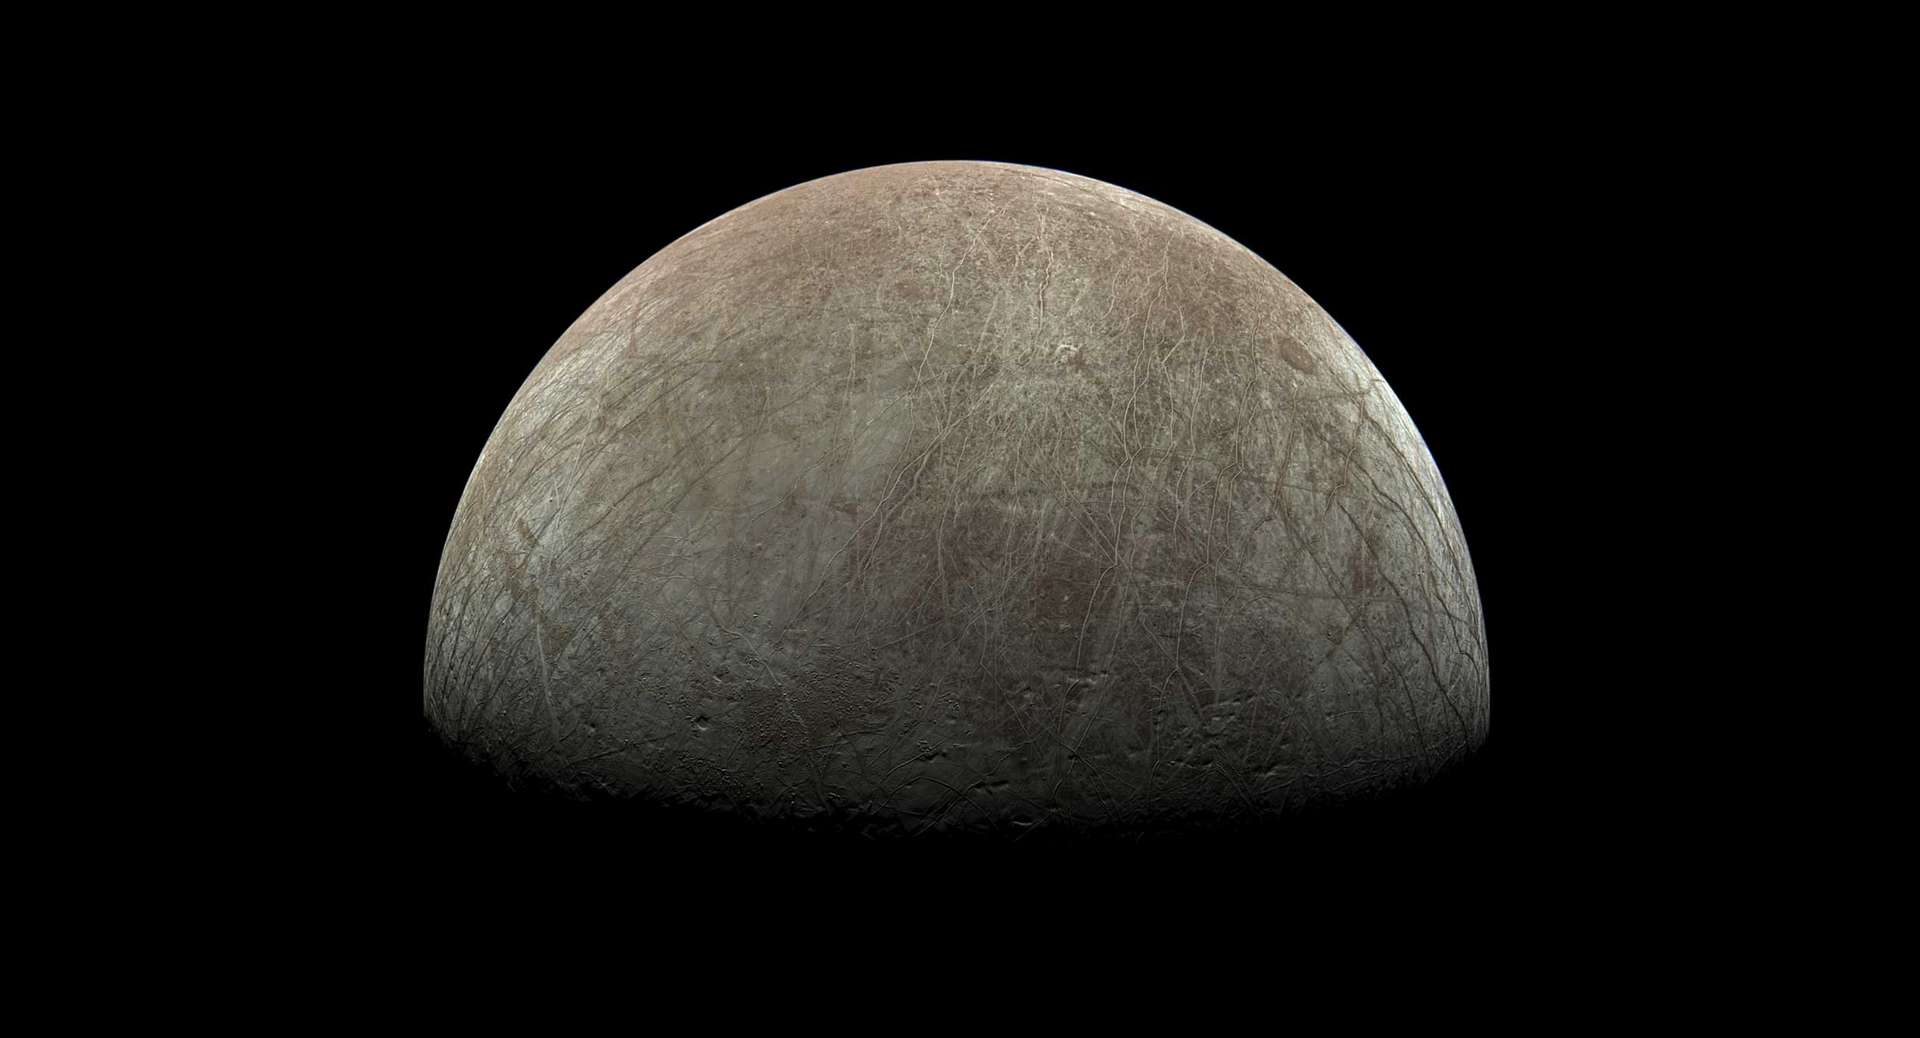 Mysteries moon. Текстура спутника Европа. Jupiter's Moon Europa. Как выглядит Хаумея. Спутник Европа и Титан глянь.